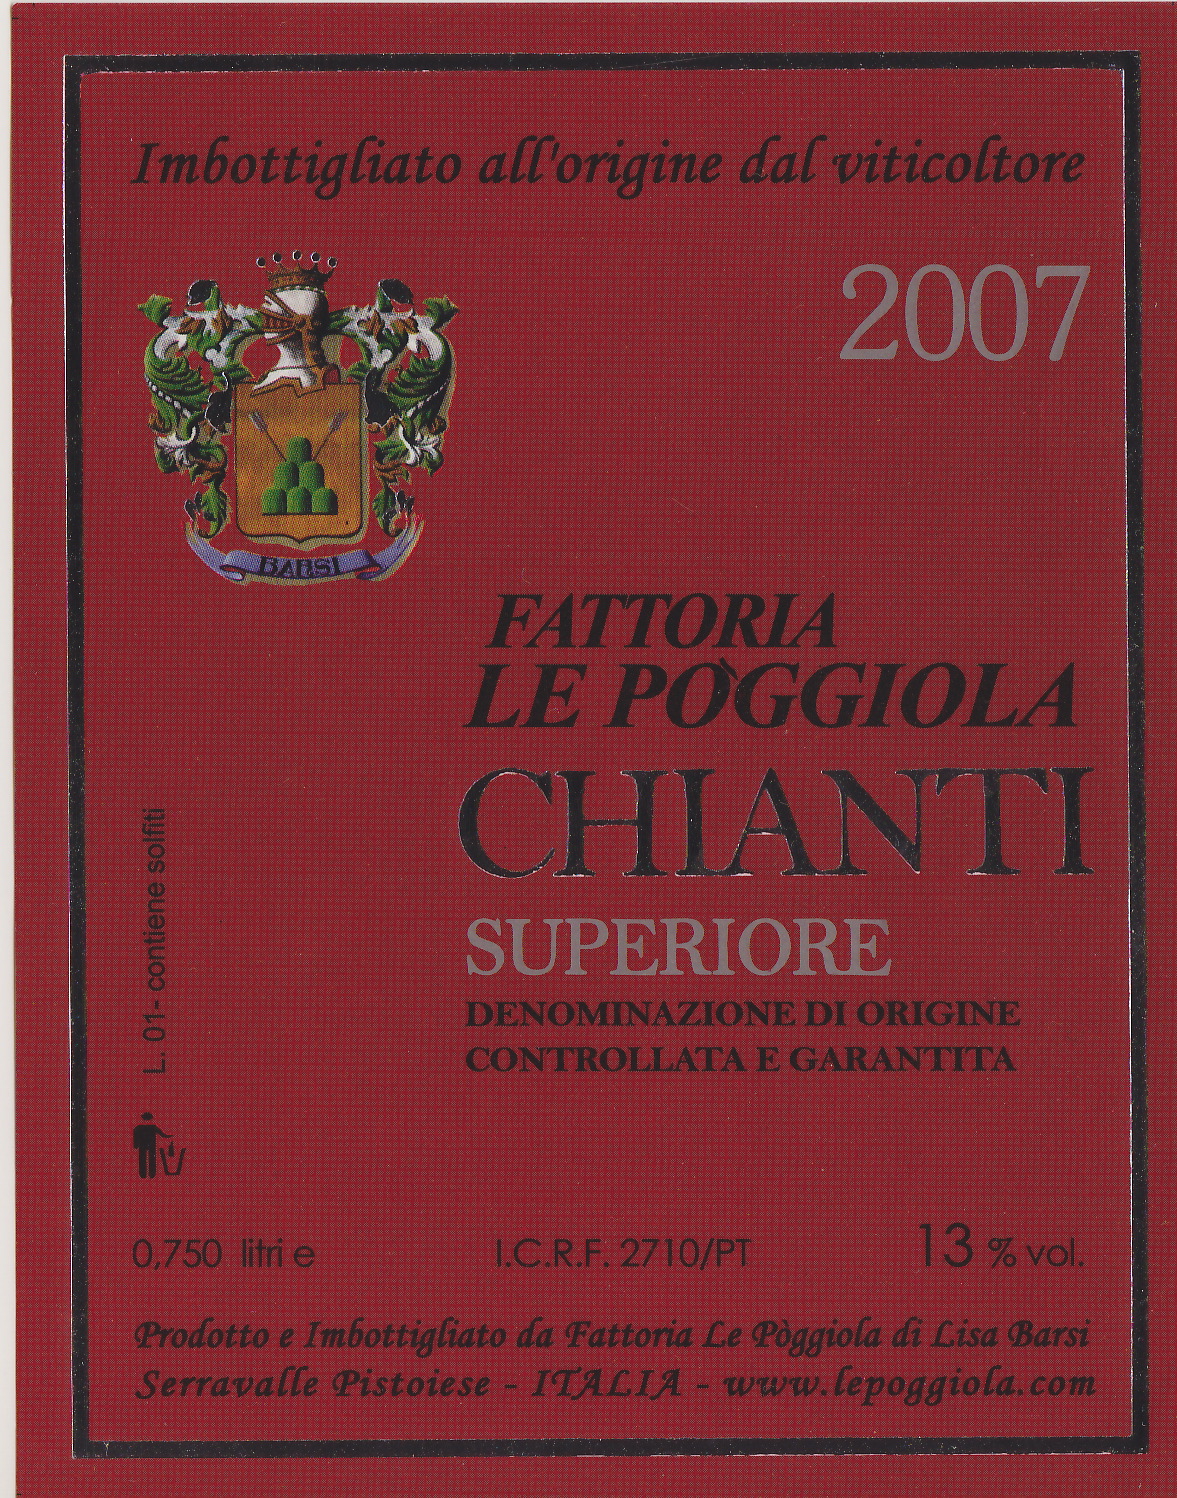 Chianti 2007 etichetta